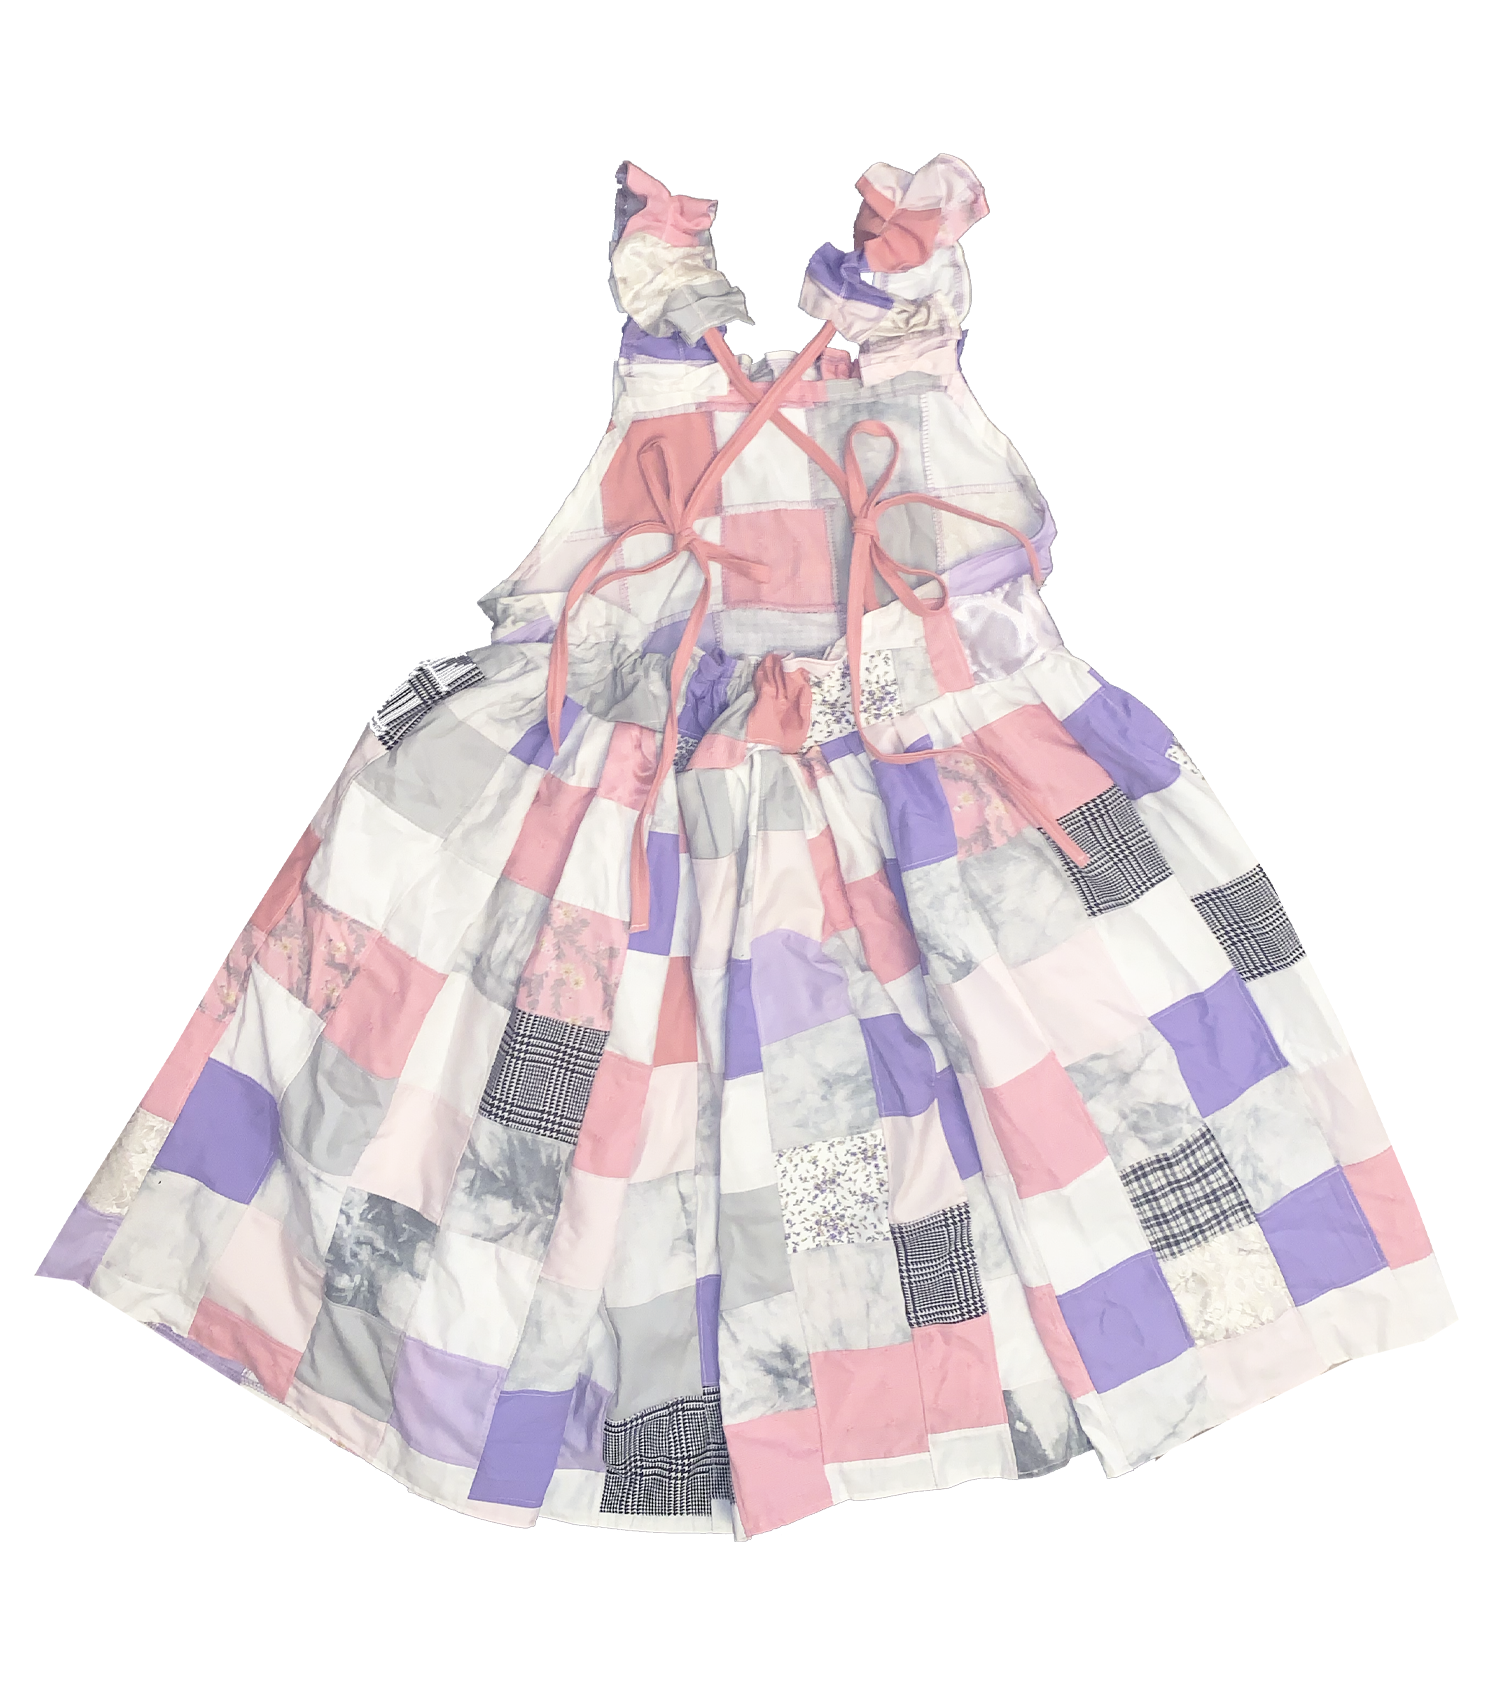 Patchwork Apron Dress - Pink, Lilac & White